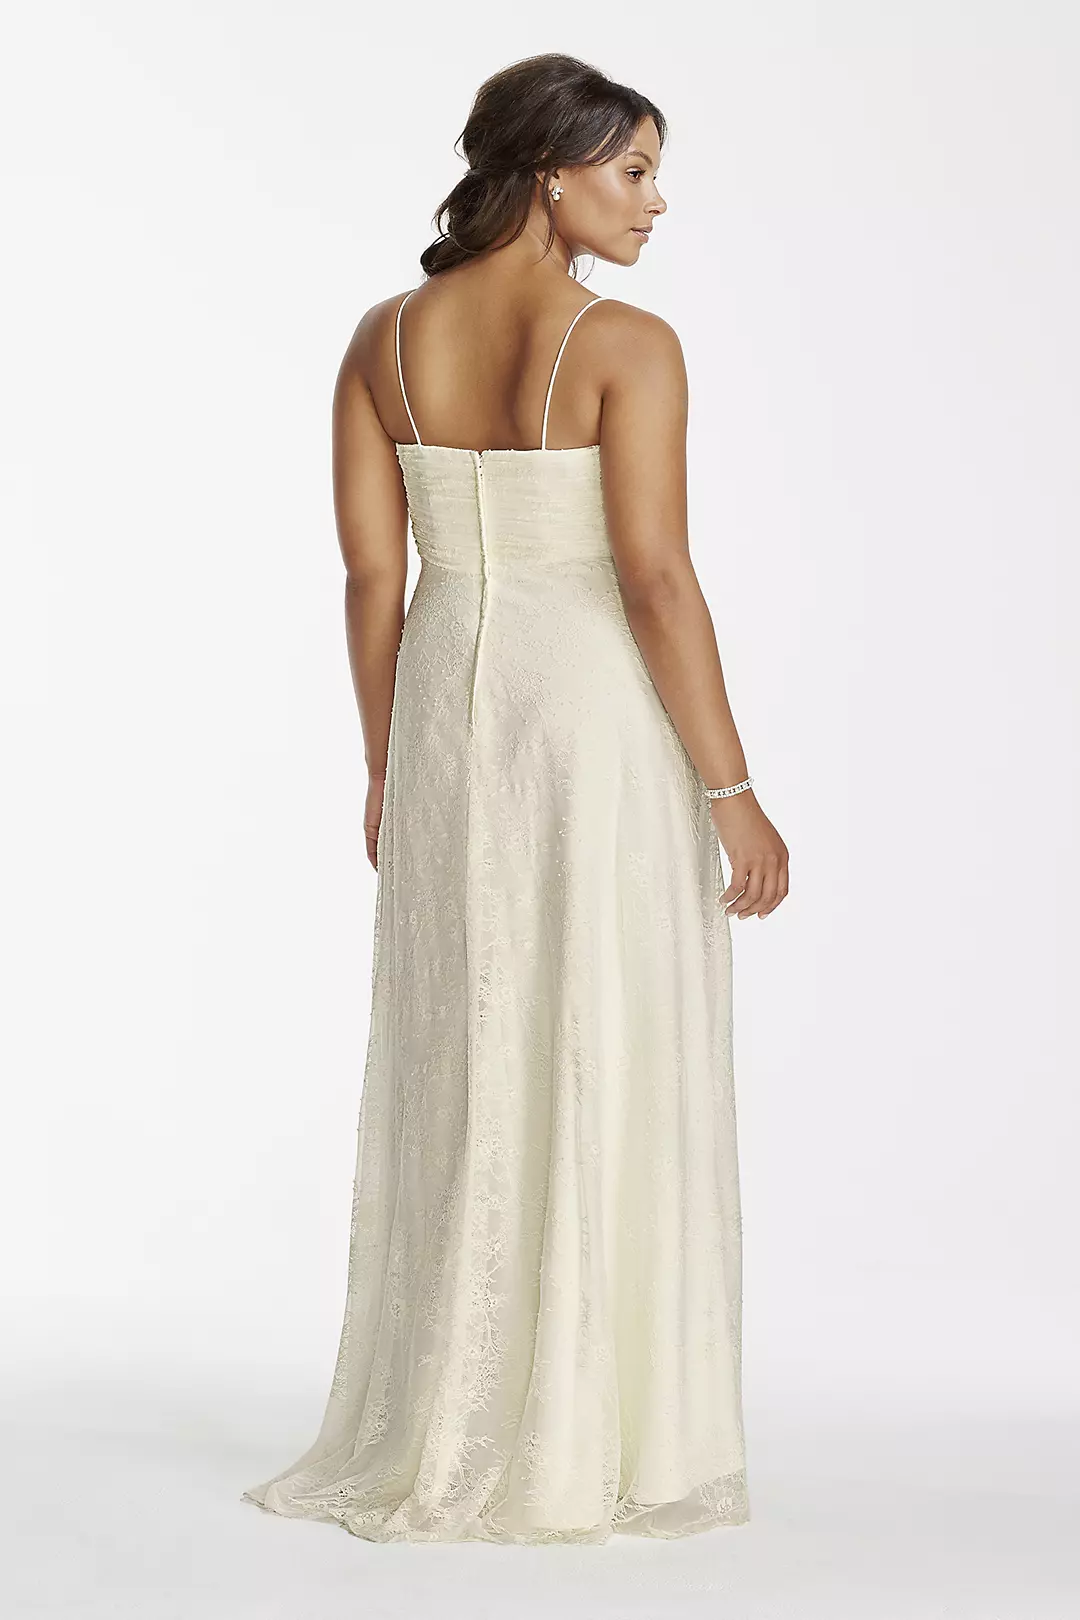 Spaghetti Strap Lace Plus Size Wedding Dress Image 2